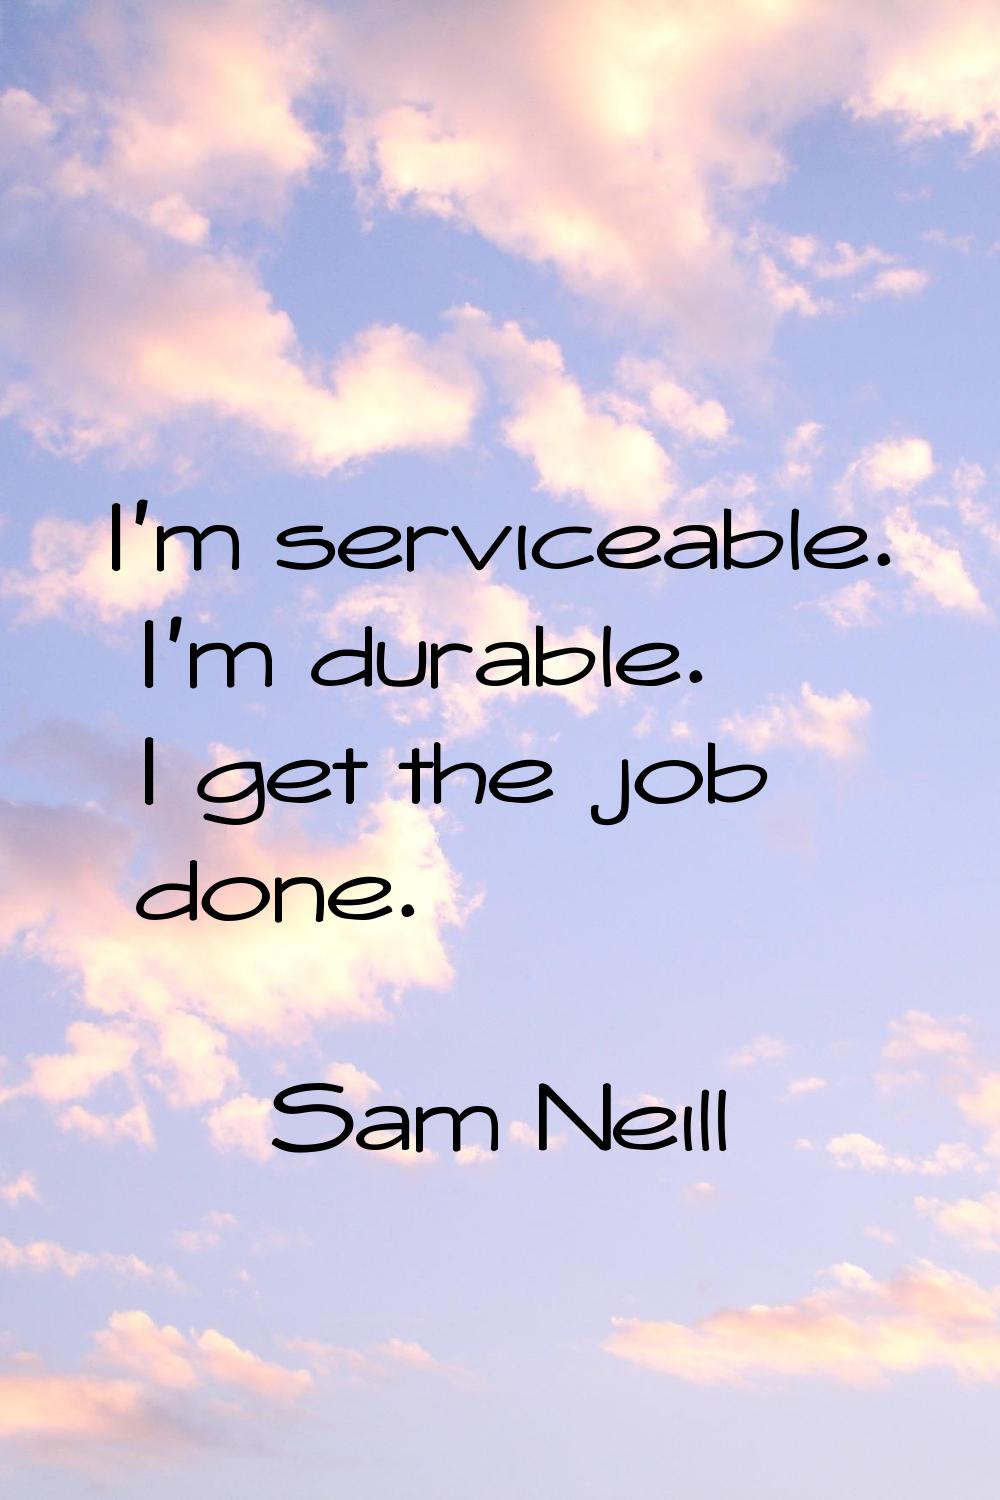 I'm serviceable. I'm durable. I get the job done.